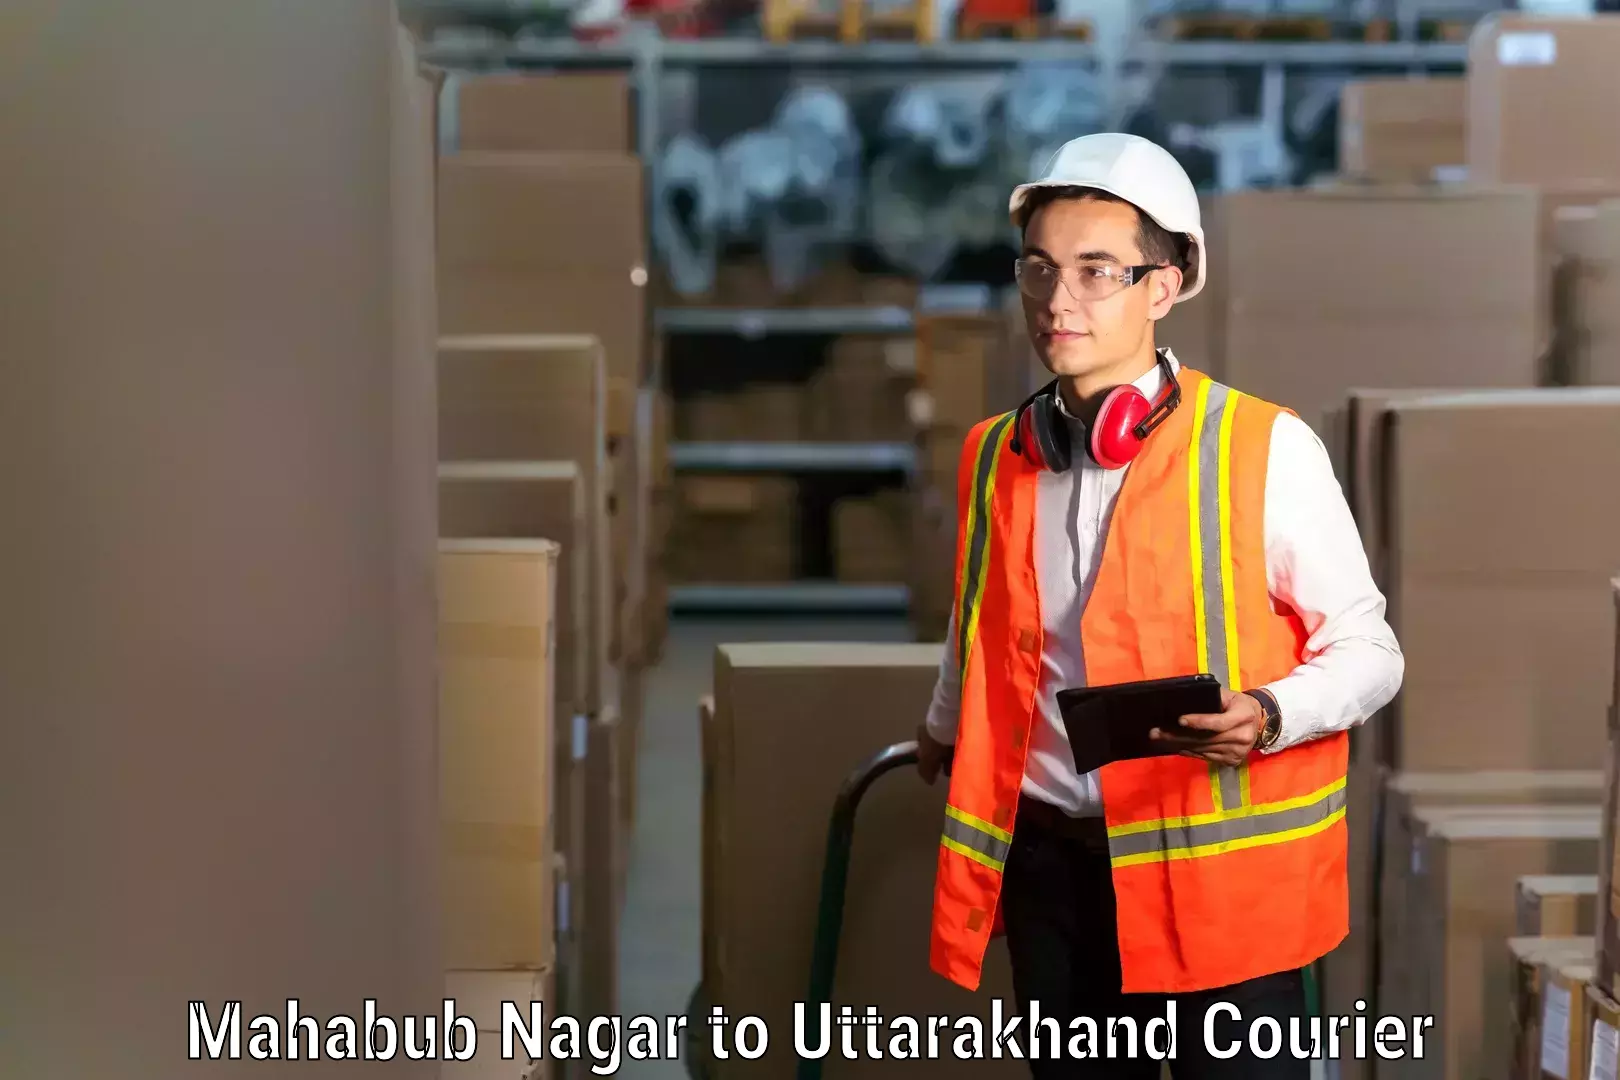 Furniture relocation experts Mahabub Nagar to Uttarakhand